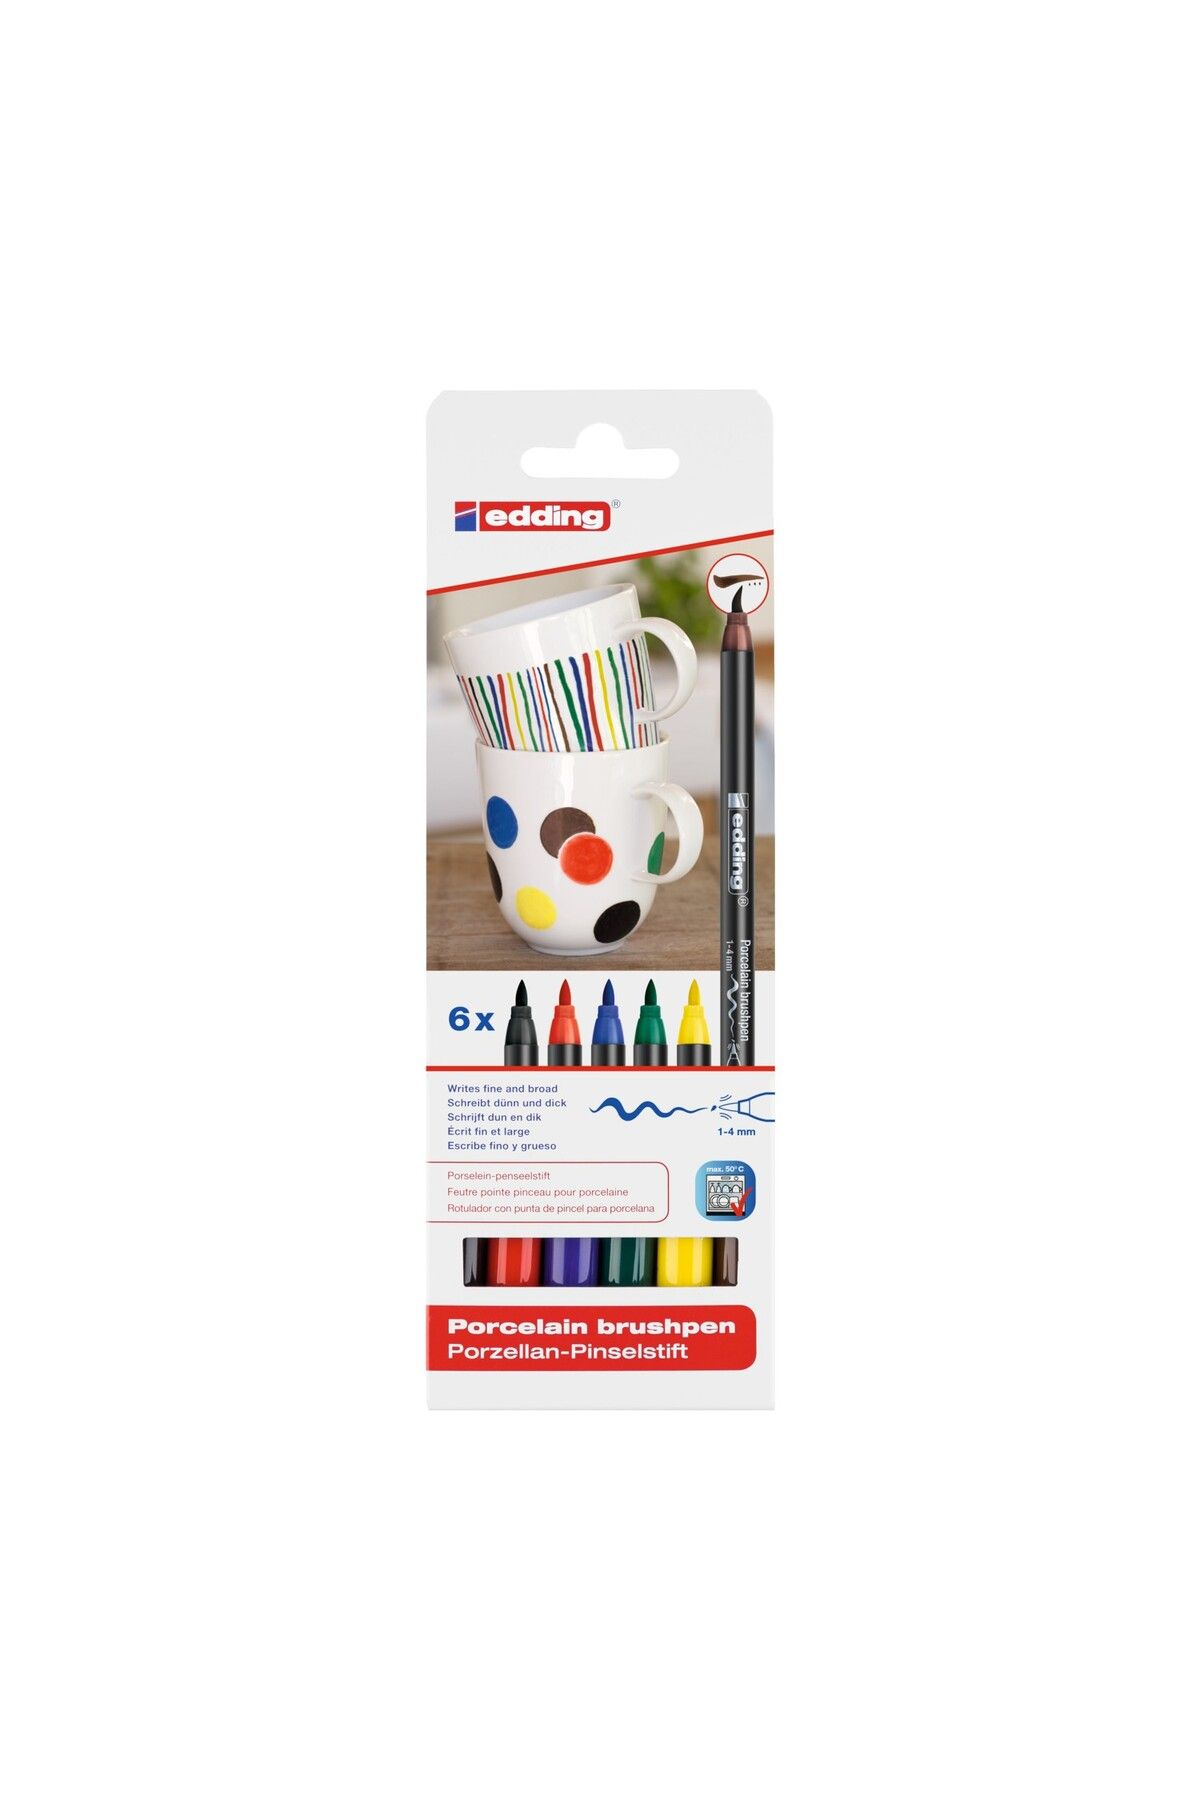 Edding 4200 Porselen Kalemi Standart Ana Renkler (6 LI PAKET)